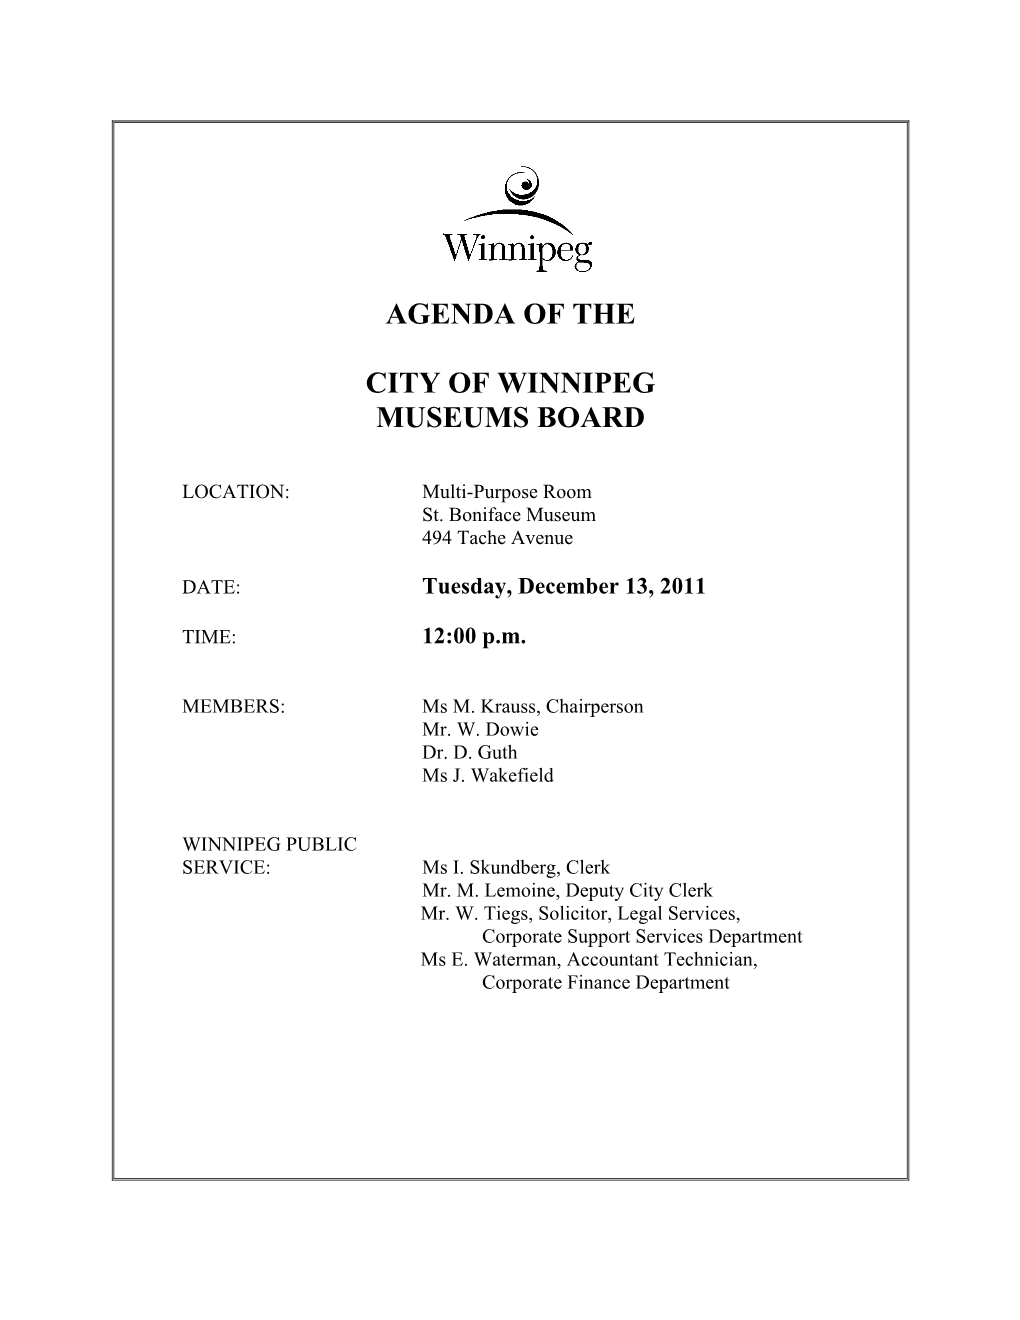 Agenda of the City of Winnipeg Museums Board